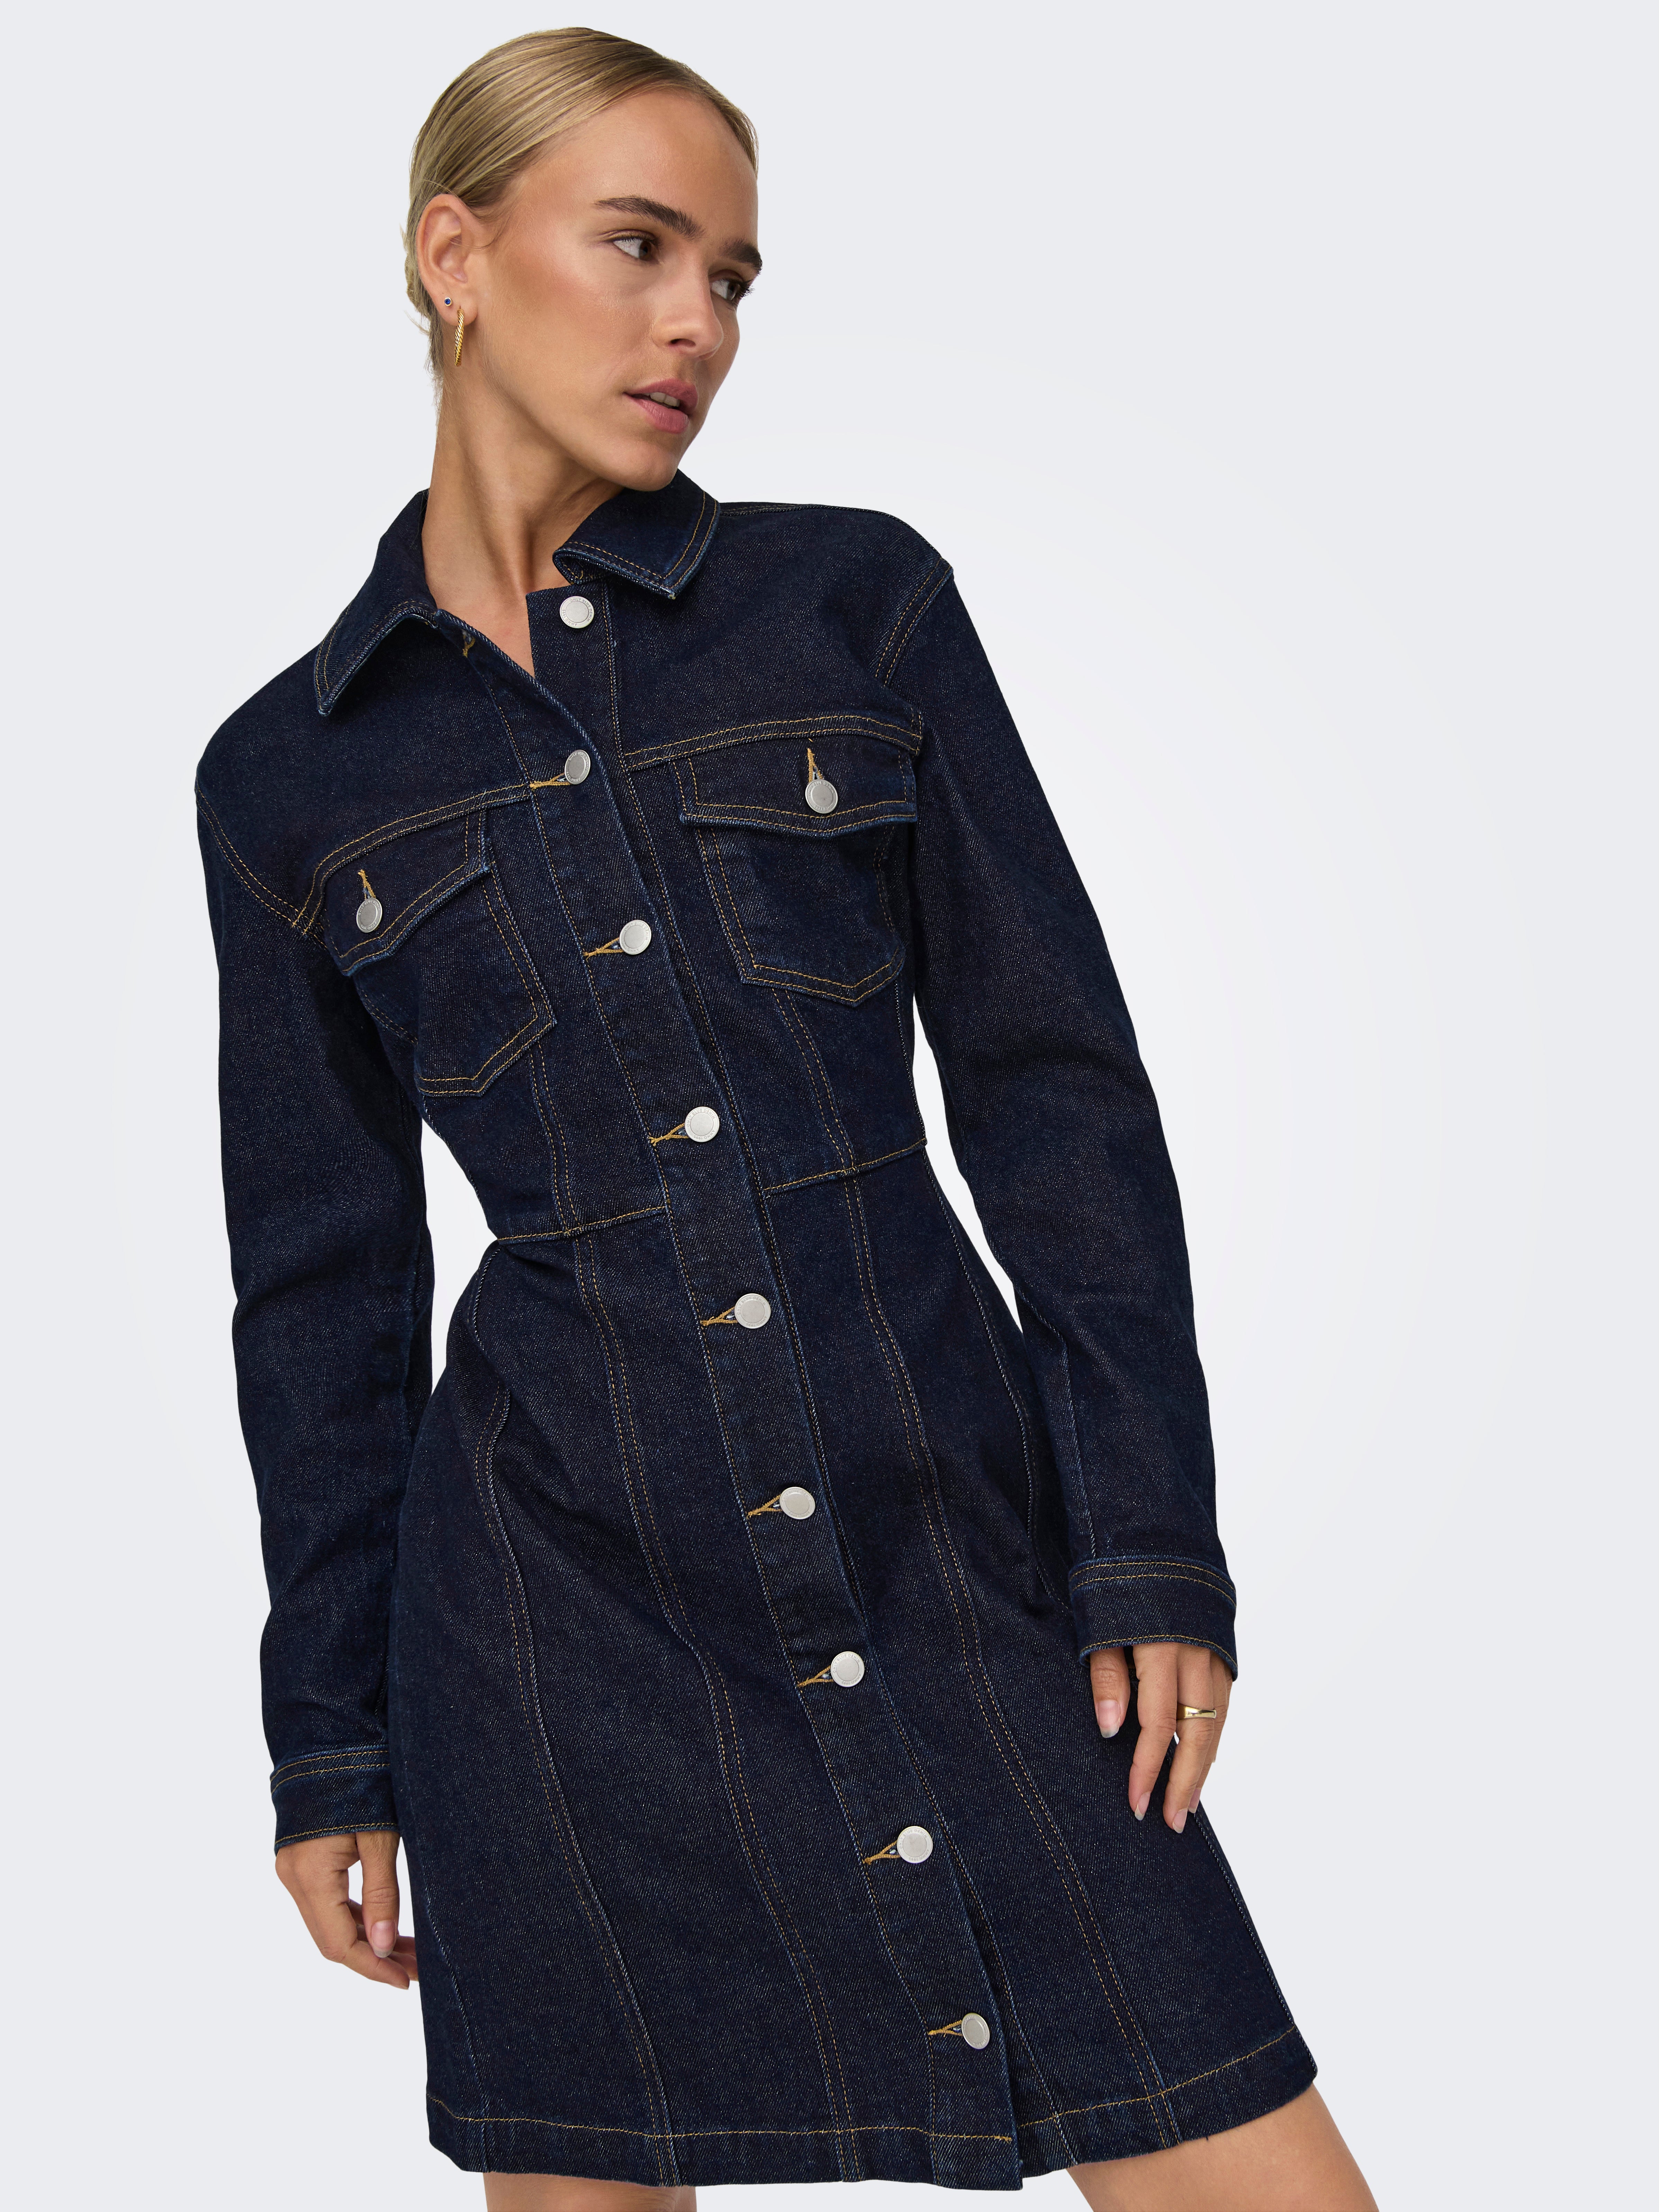 Buy Online|Spykar Women Dark Blue Cotton Regular Fit Classic Collar Knee  Length Denim Dress